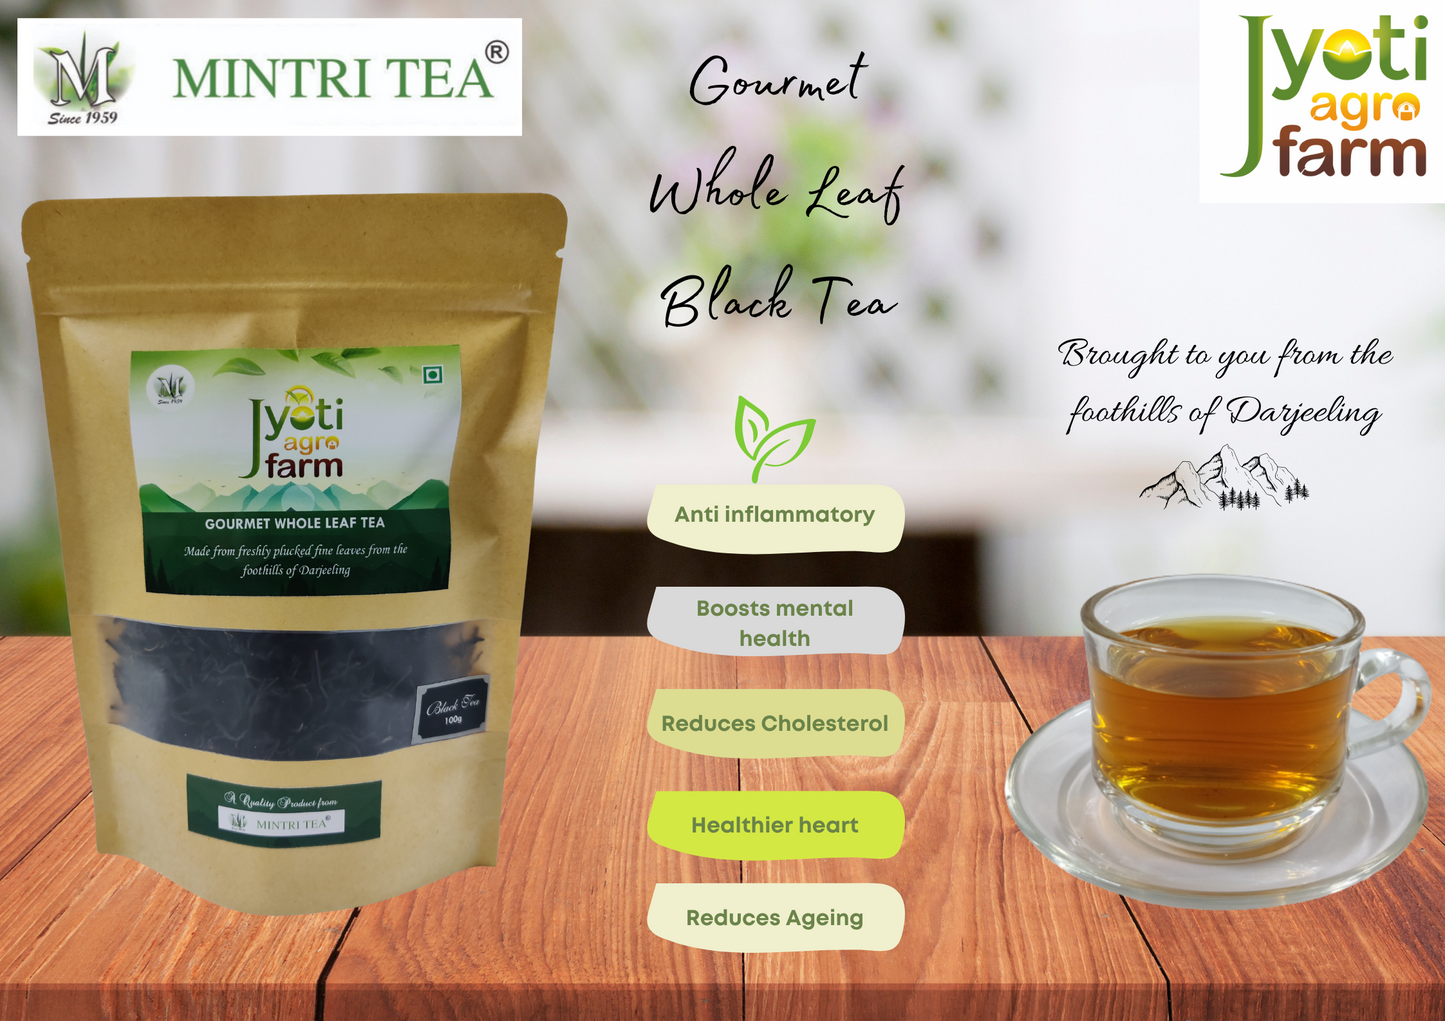 Premium English Orthodox Black Gourmet Whole Leaf Tea from the foothills of Darjeeling | Jyoti Agro Farm | Bulk Pack of 12 kgs